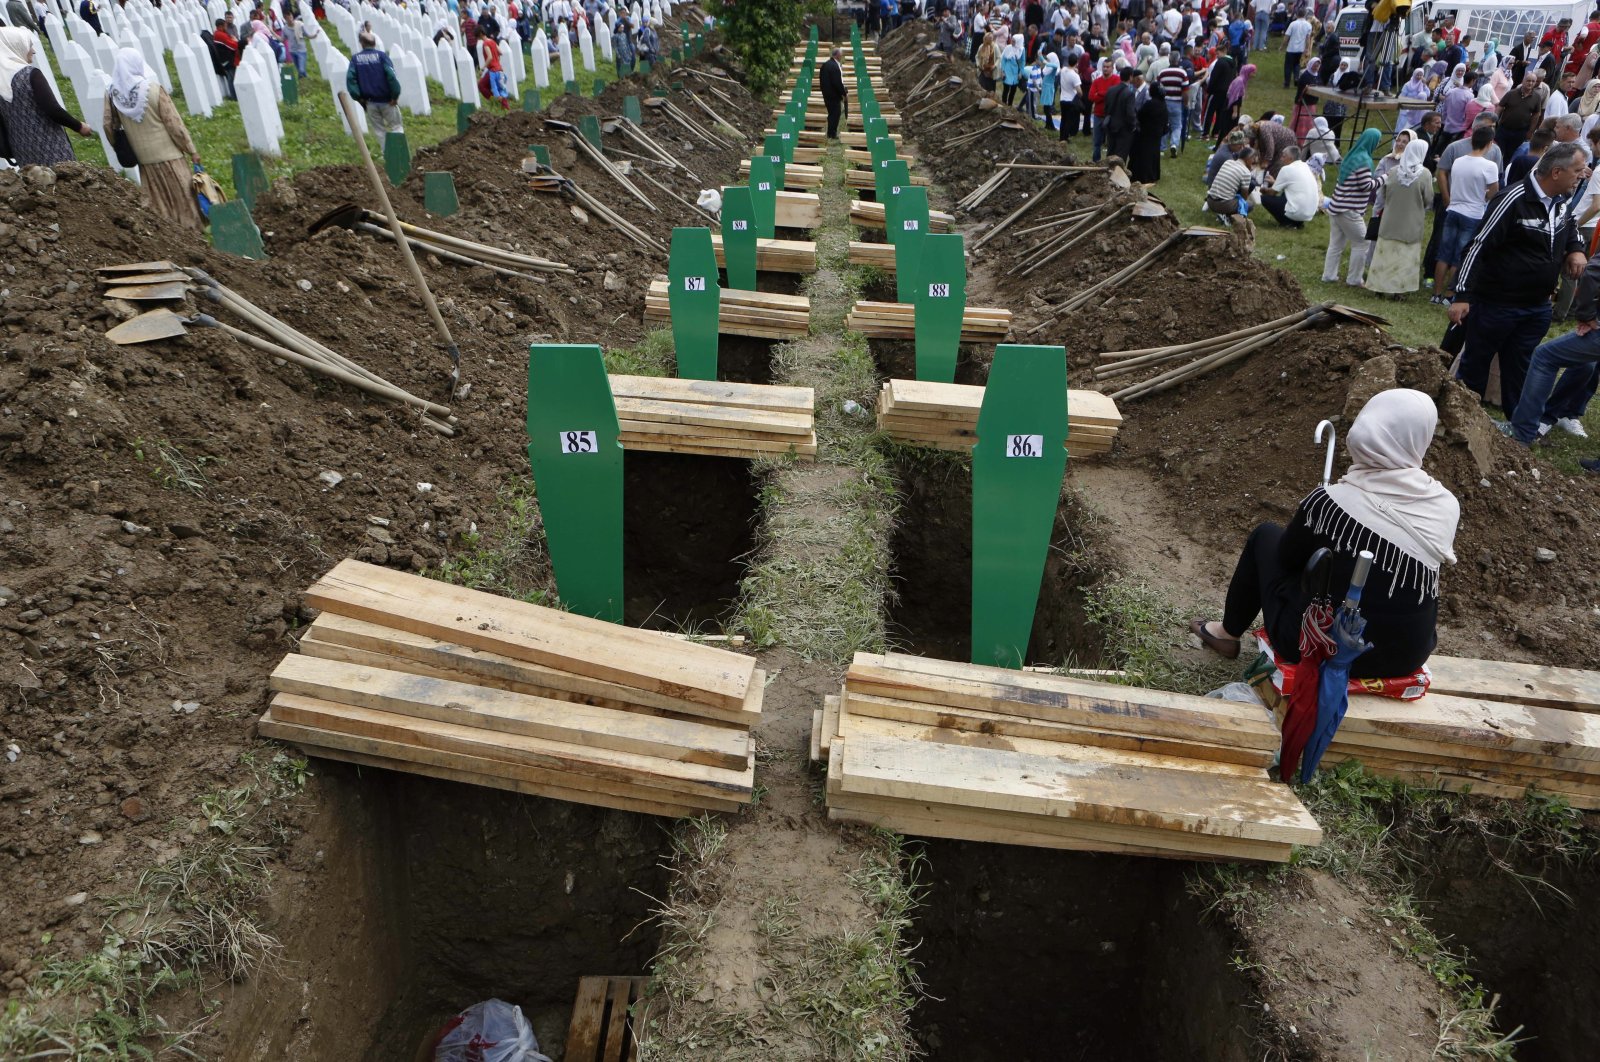 Bosniak people walk among the graves of victims of the Srebrenica massacre during a memorial ceremony in Srebrenica, Bosnia-Herzegovina, Friday, July 11, 2014. (AP Photo)